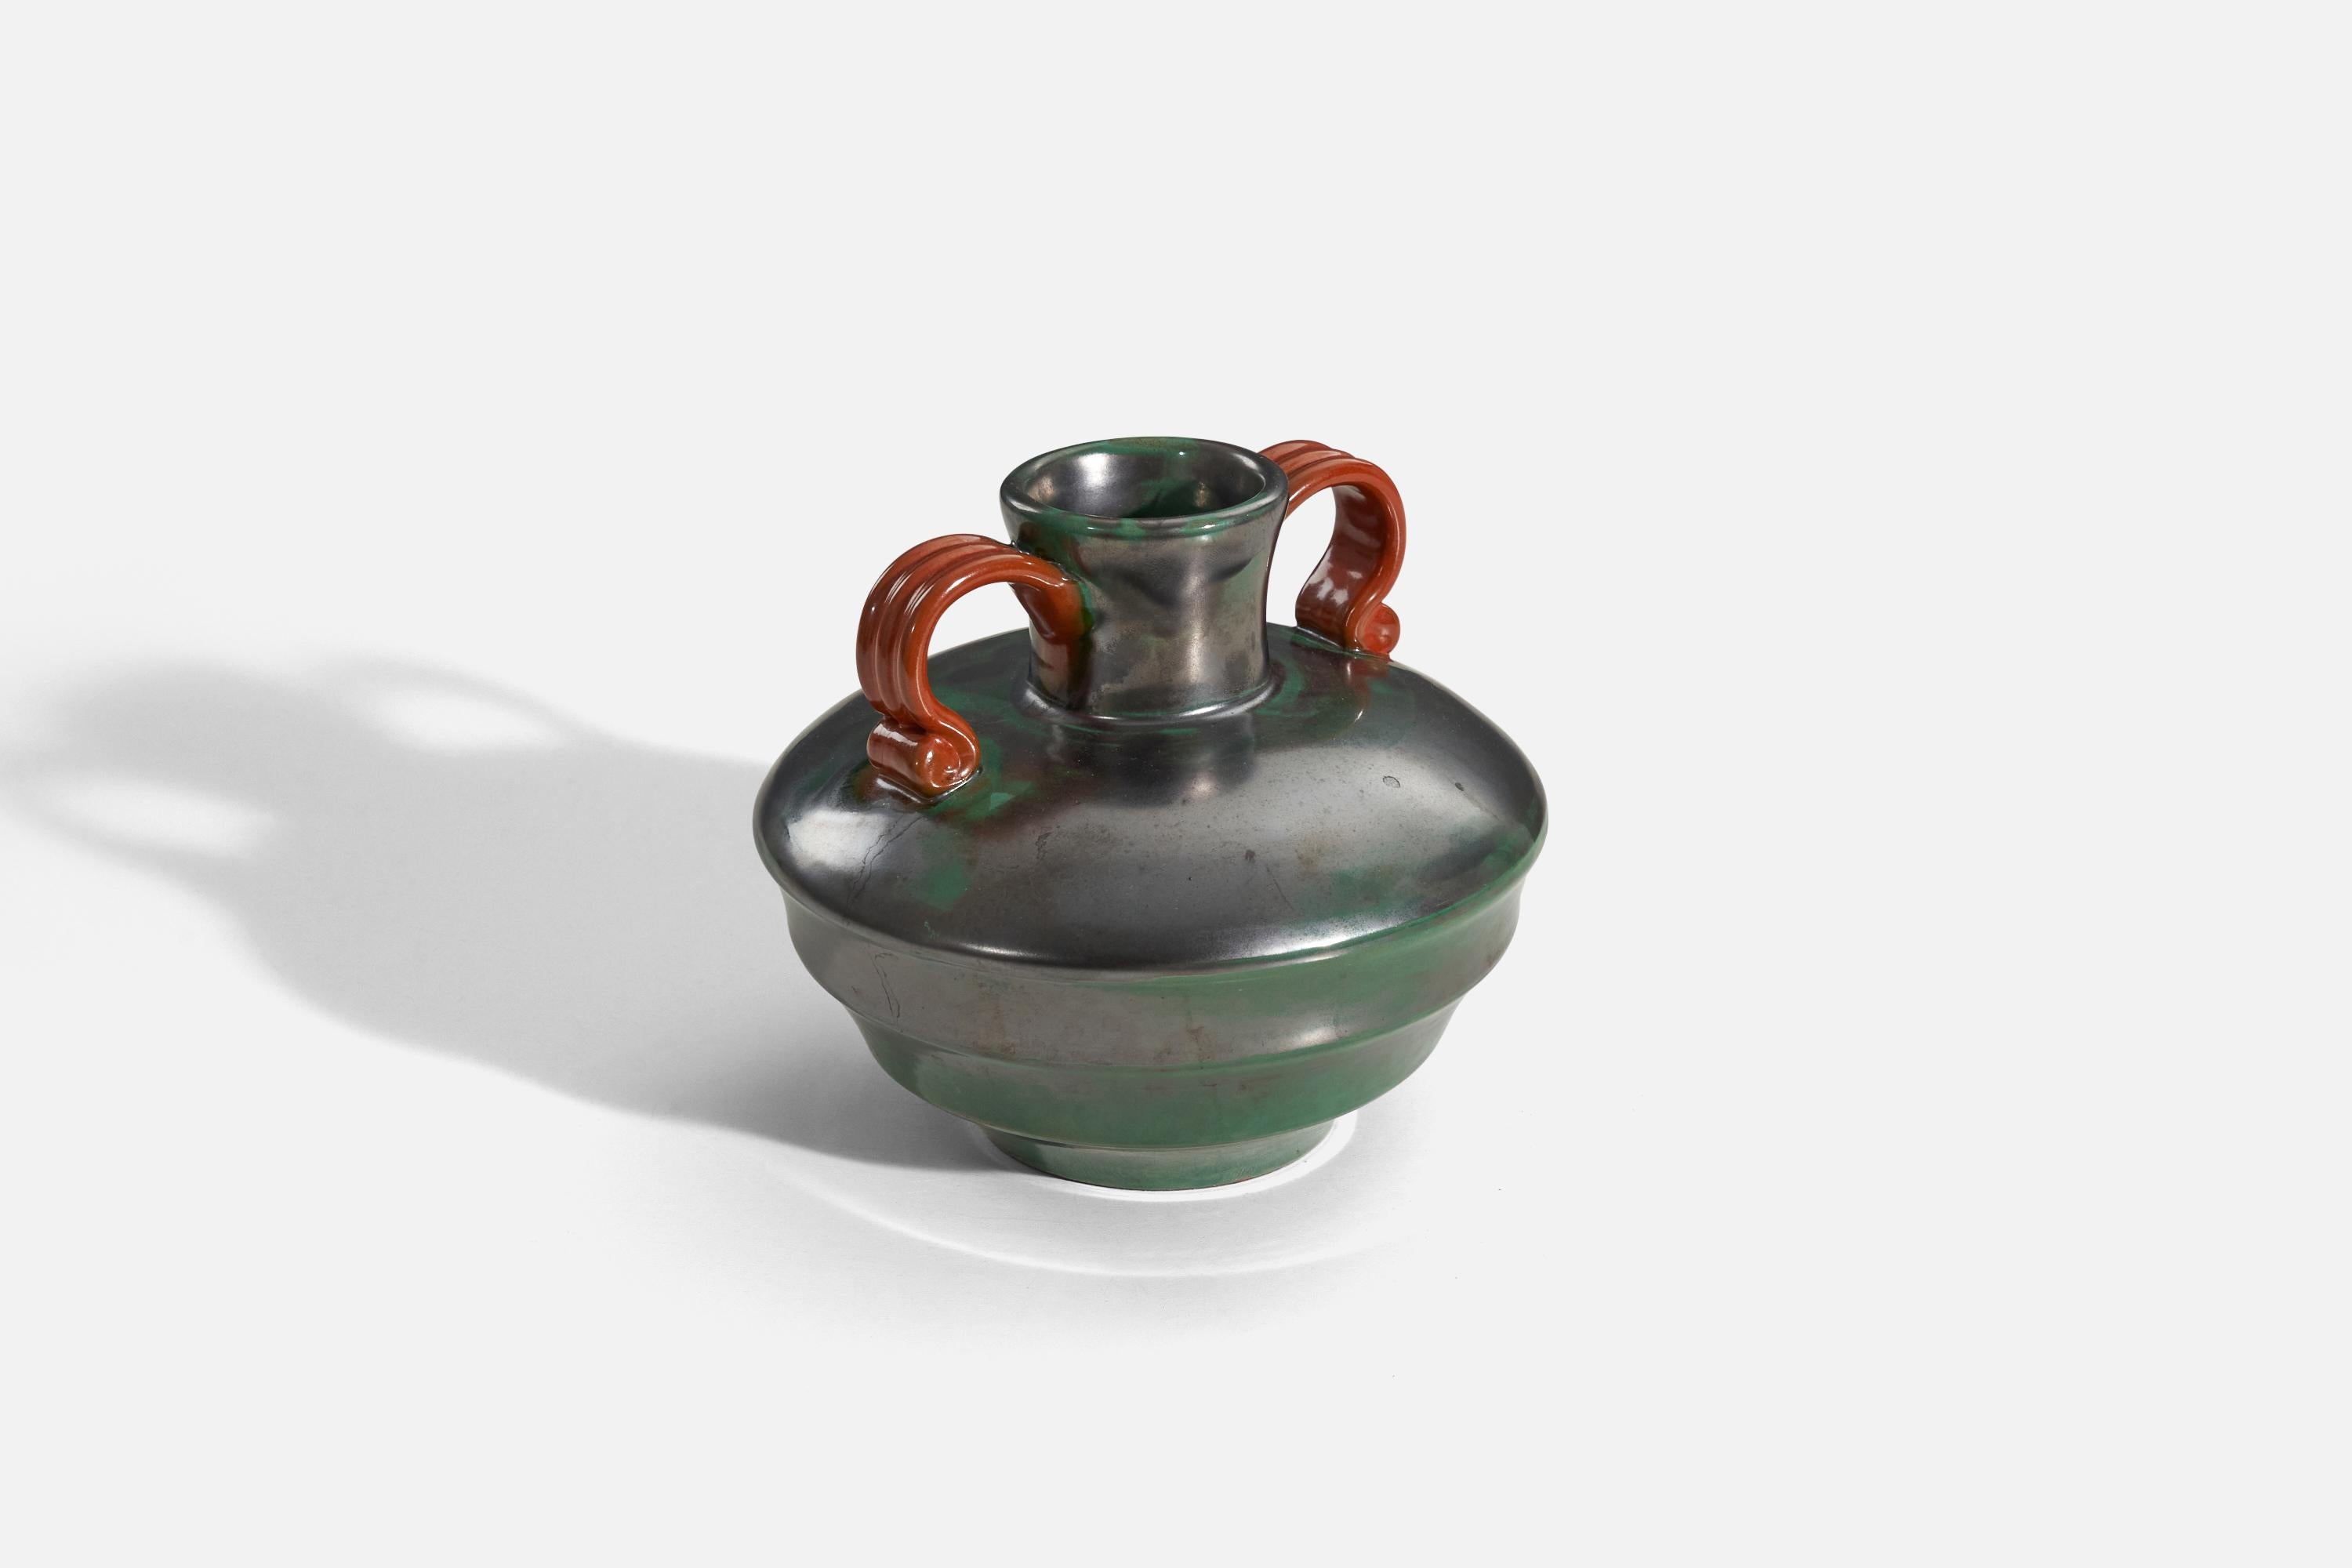 Scandinavian Modern Upsala-Ekeby, Vase, Green and Orange-Glazed Earthenware, Sweden, 1940s